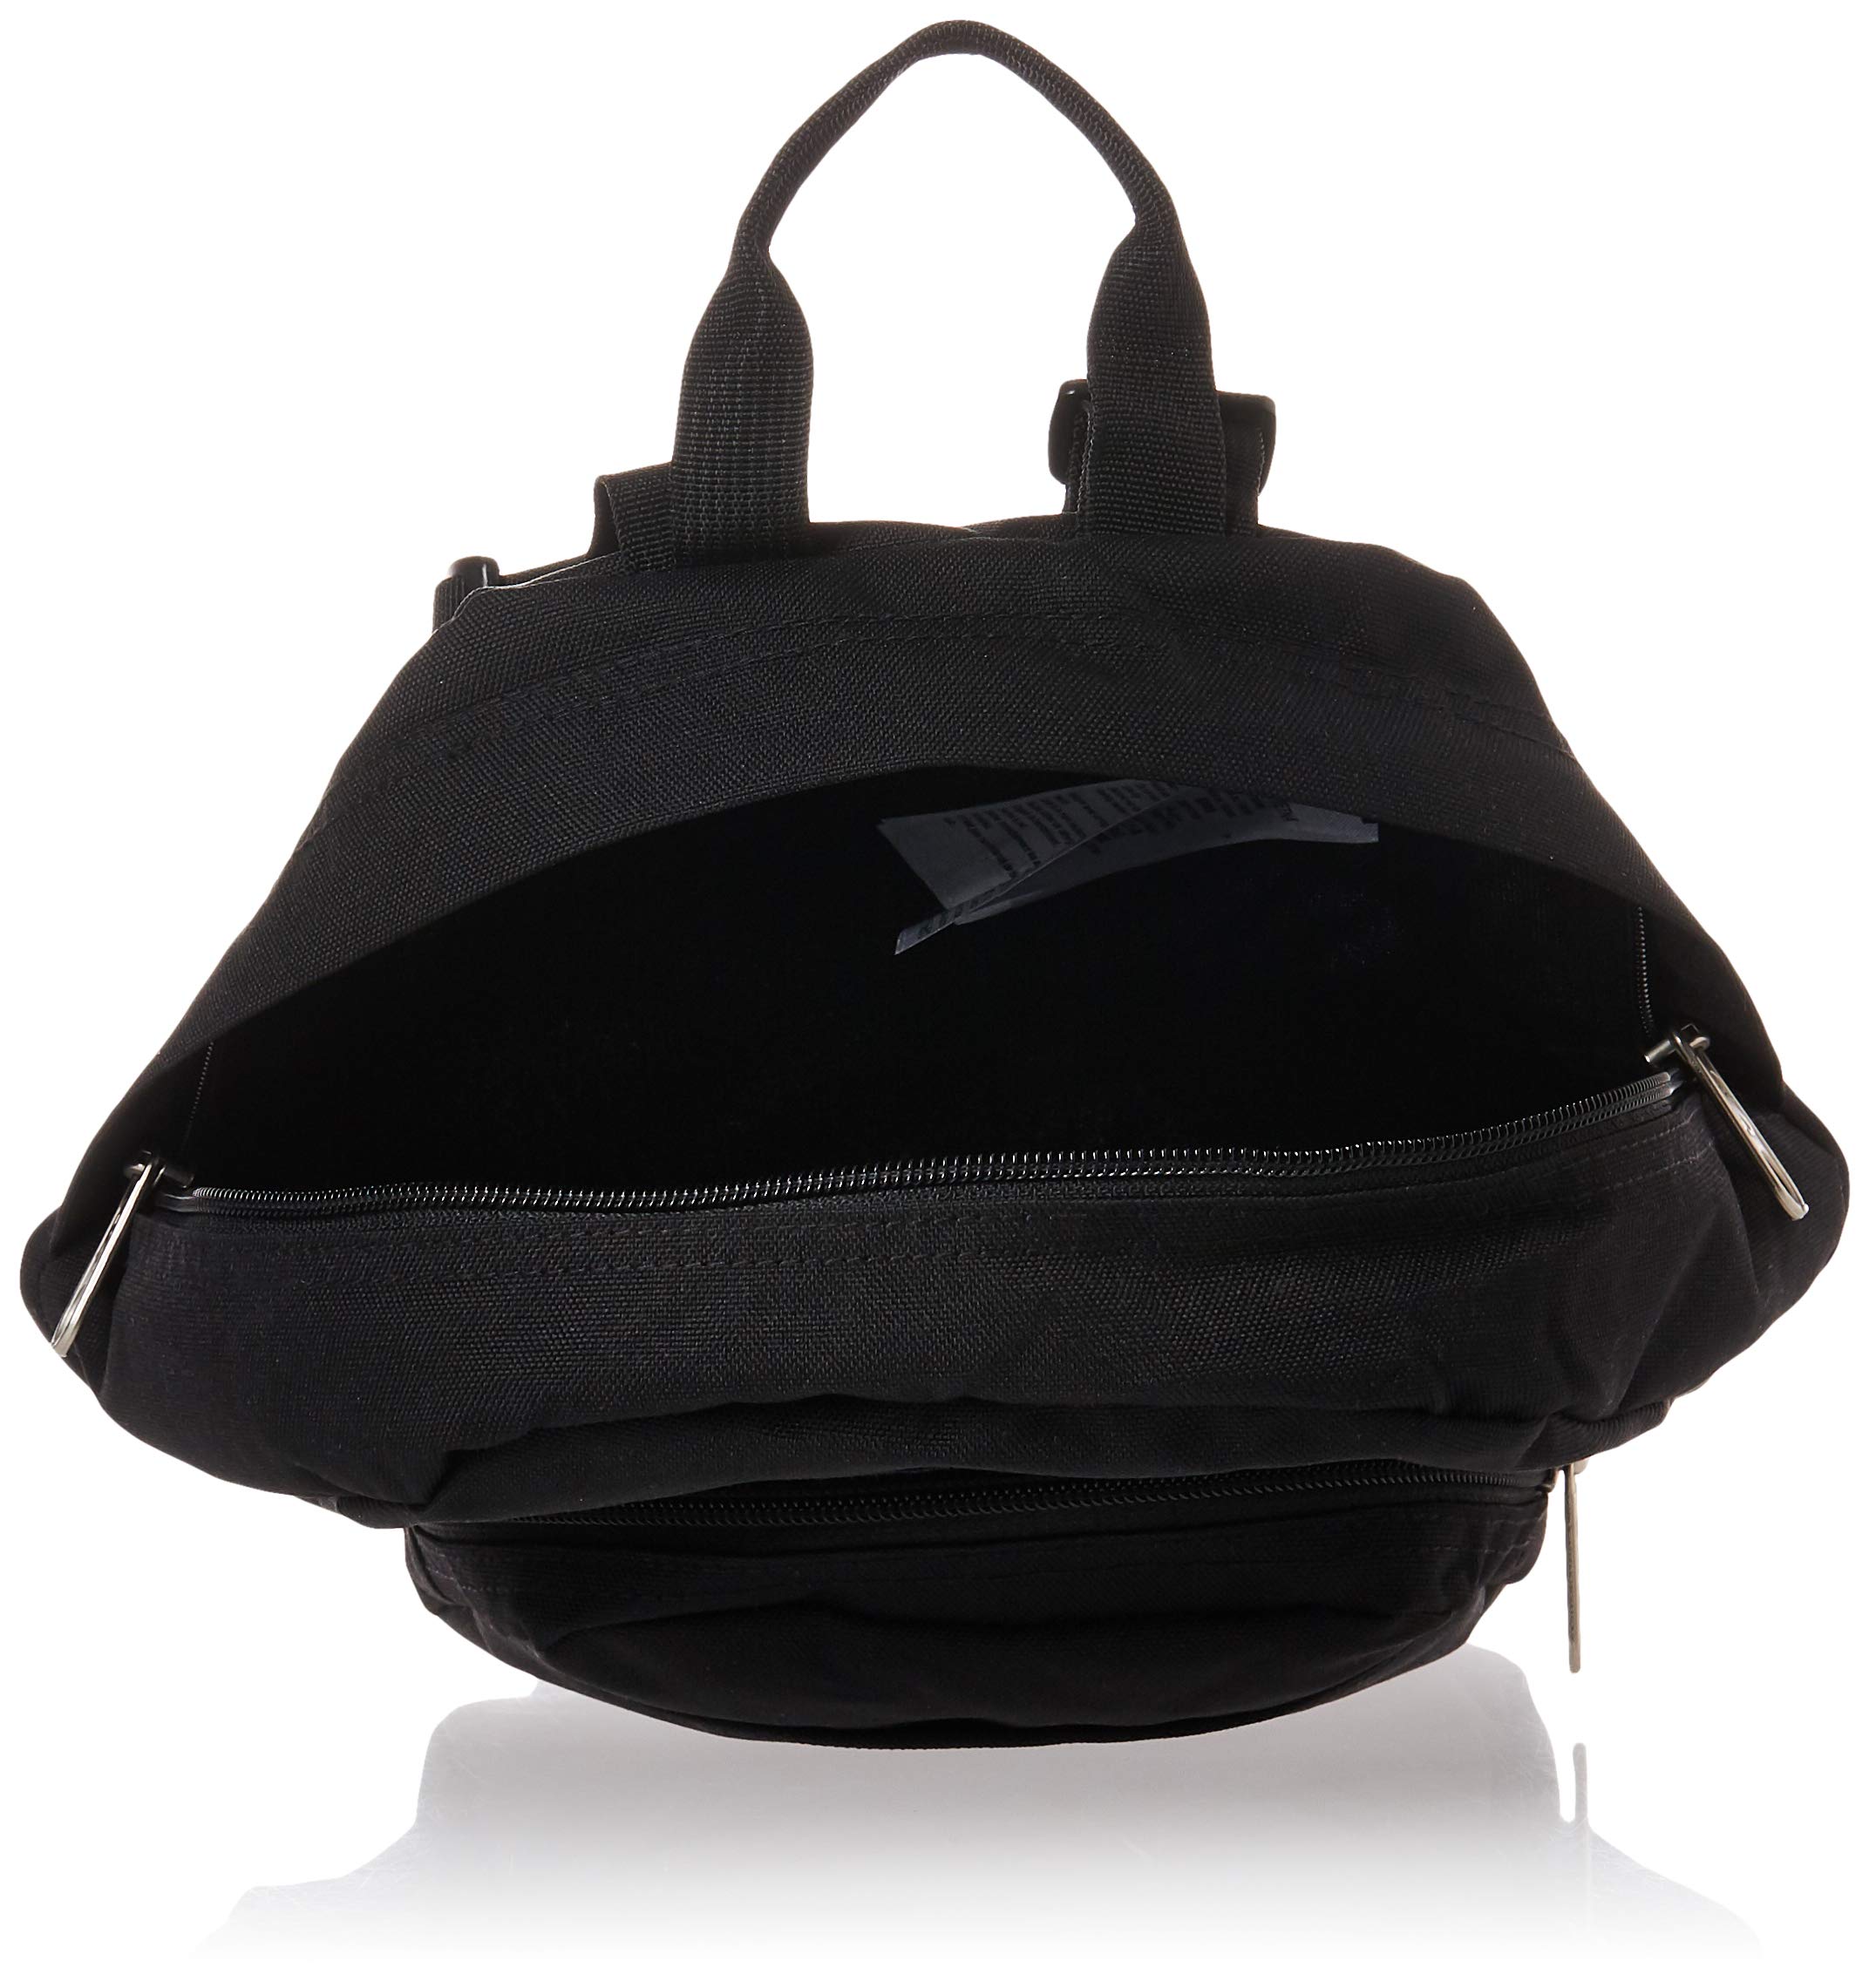 JanSport Half Pint Mini Backpack, Black, 10.2 L - Durable Mini Bag Purse with Adjustable Shoulder Straps, Single Main Compartment, Zippered Stash Pocket